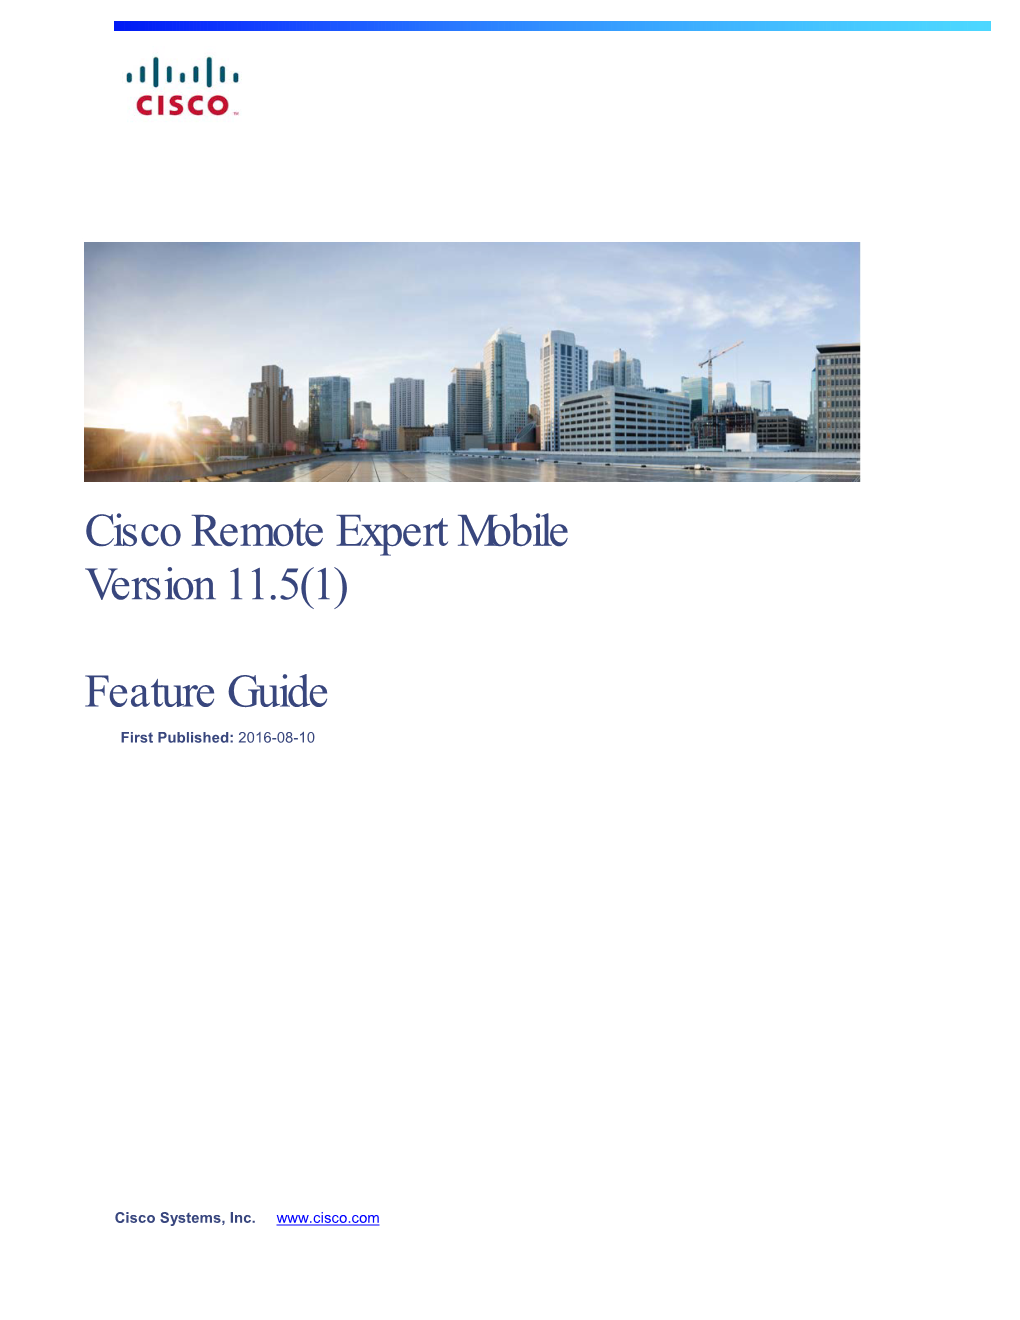 Cisco Remote Expert Mobile Feature Guide Version 11.5(1)